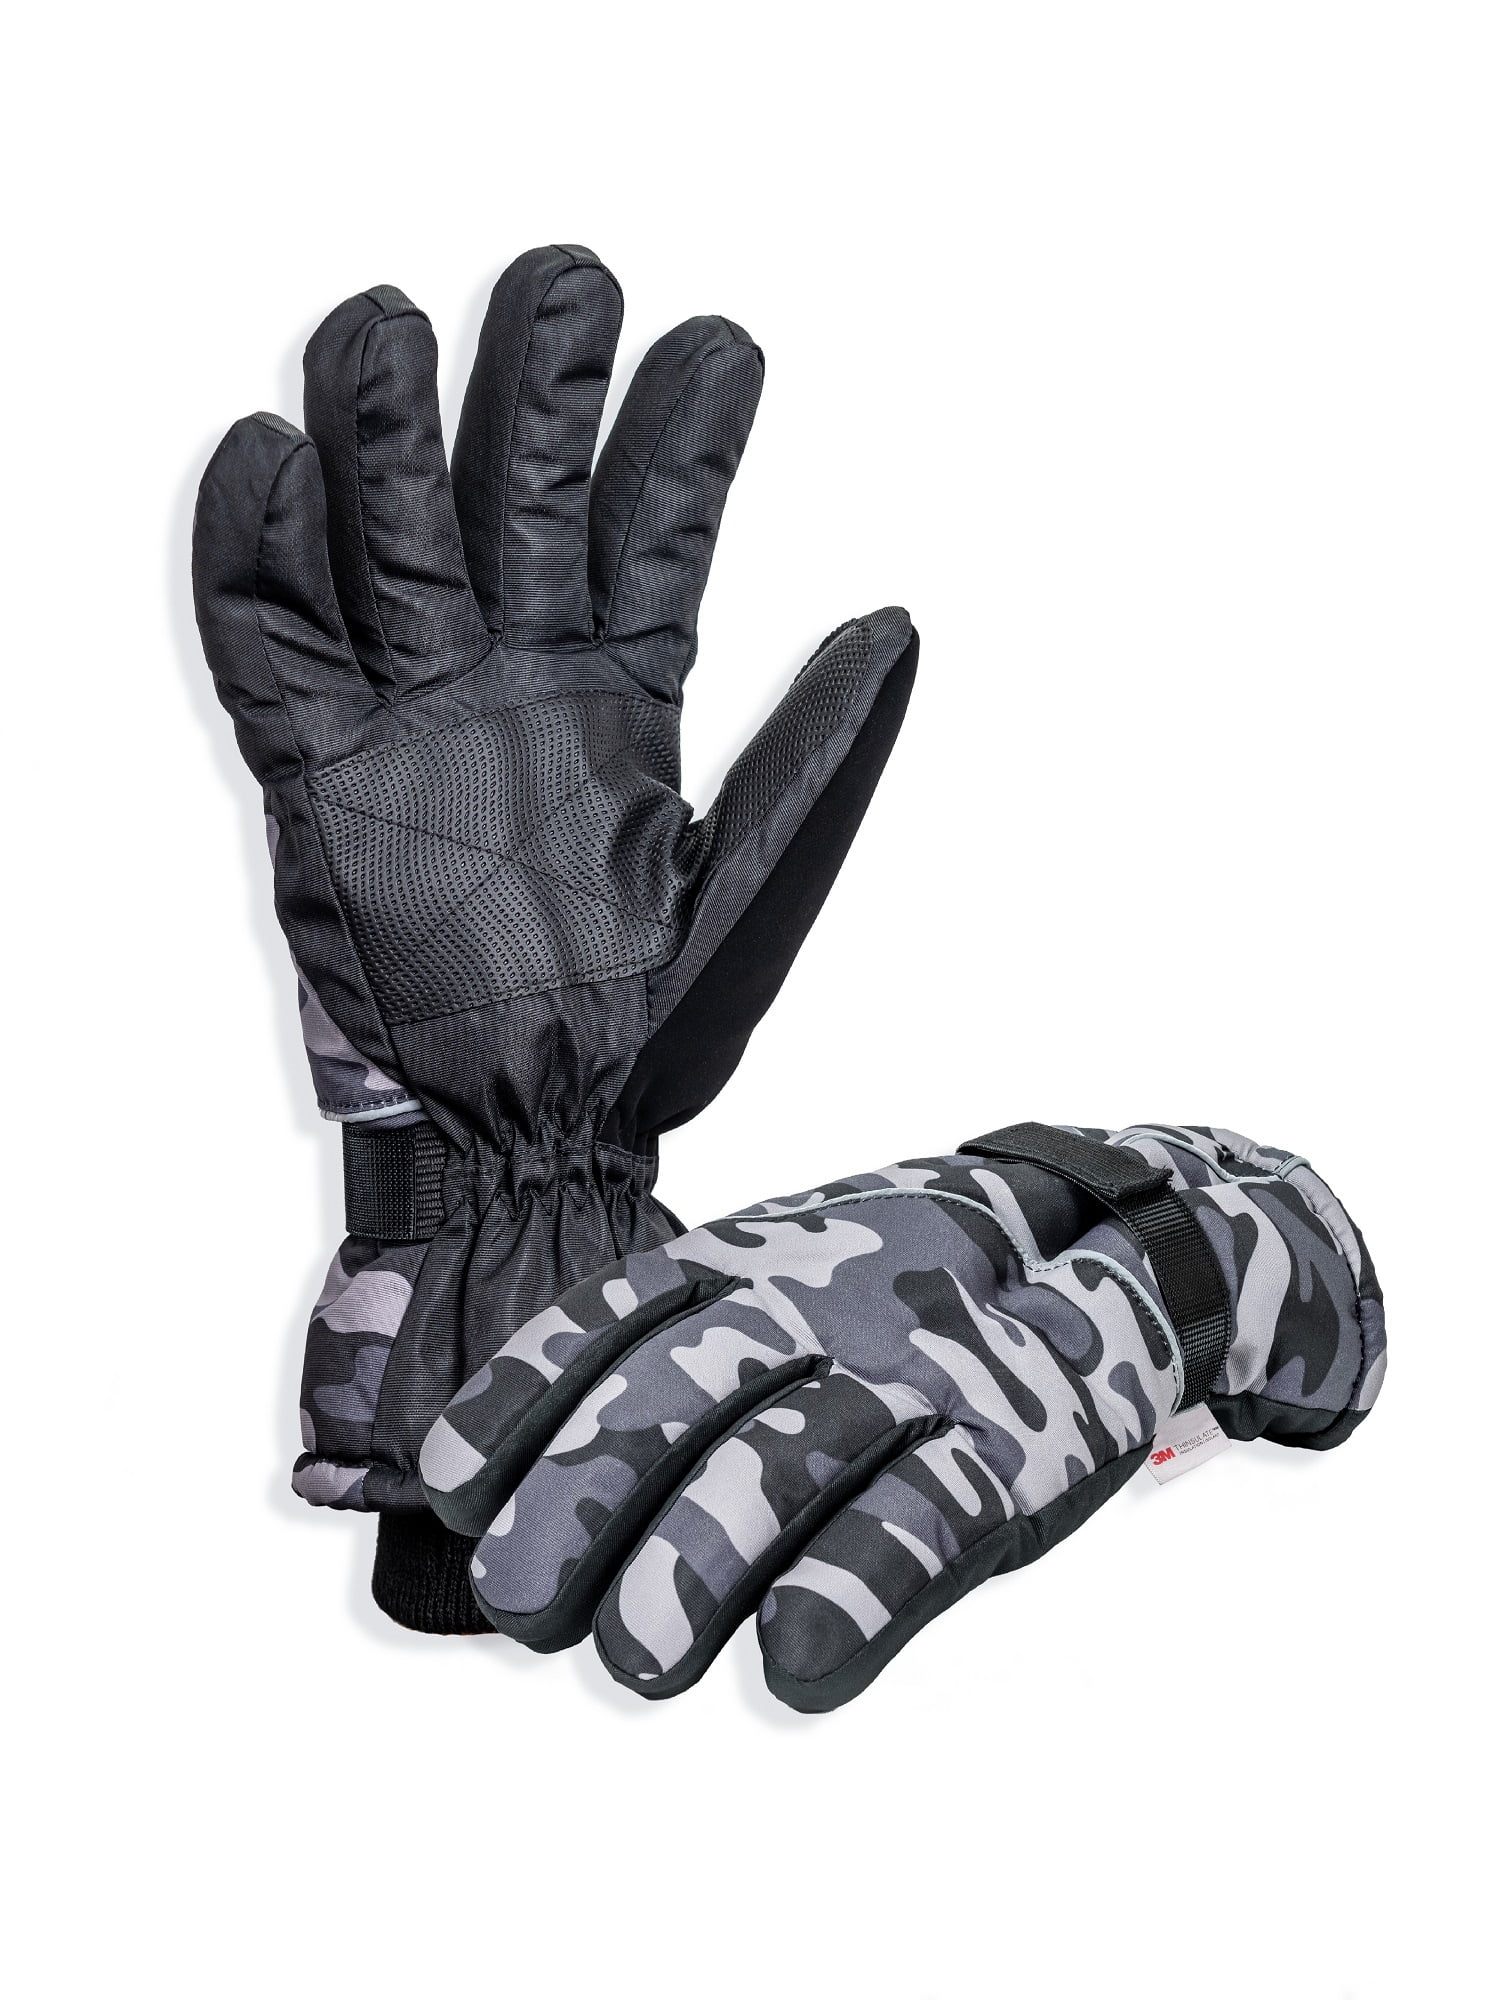 SK1013-OSFM, Men's Premium Ski Glove, 40 gm 3M Thinsulate Lined, Black (One  Size Fits Most) 